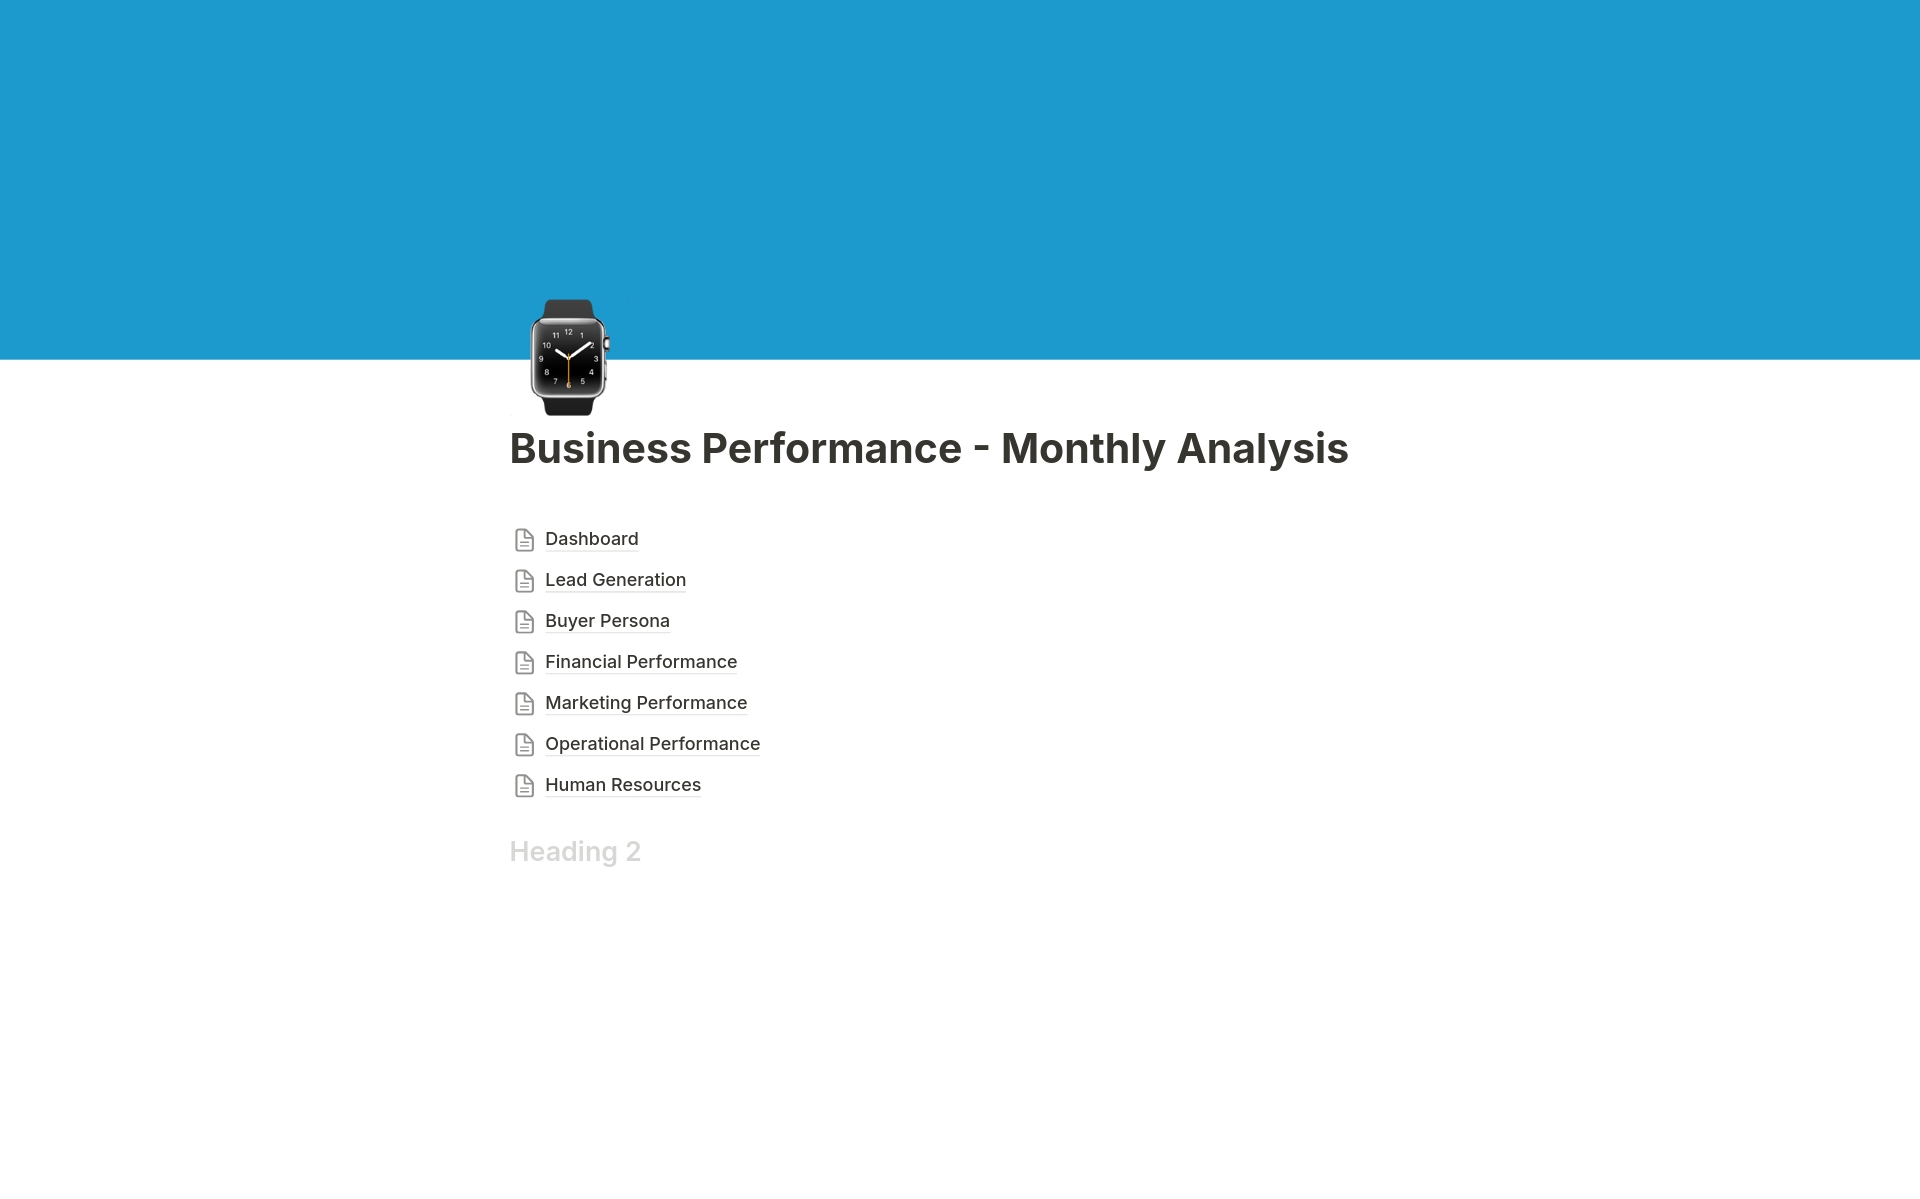 Vista previa de plantilla para Business Performance Analysis